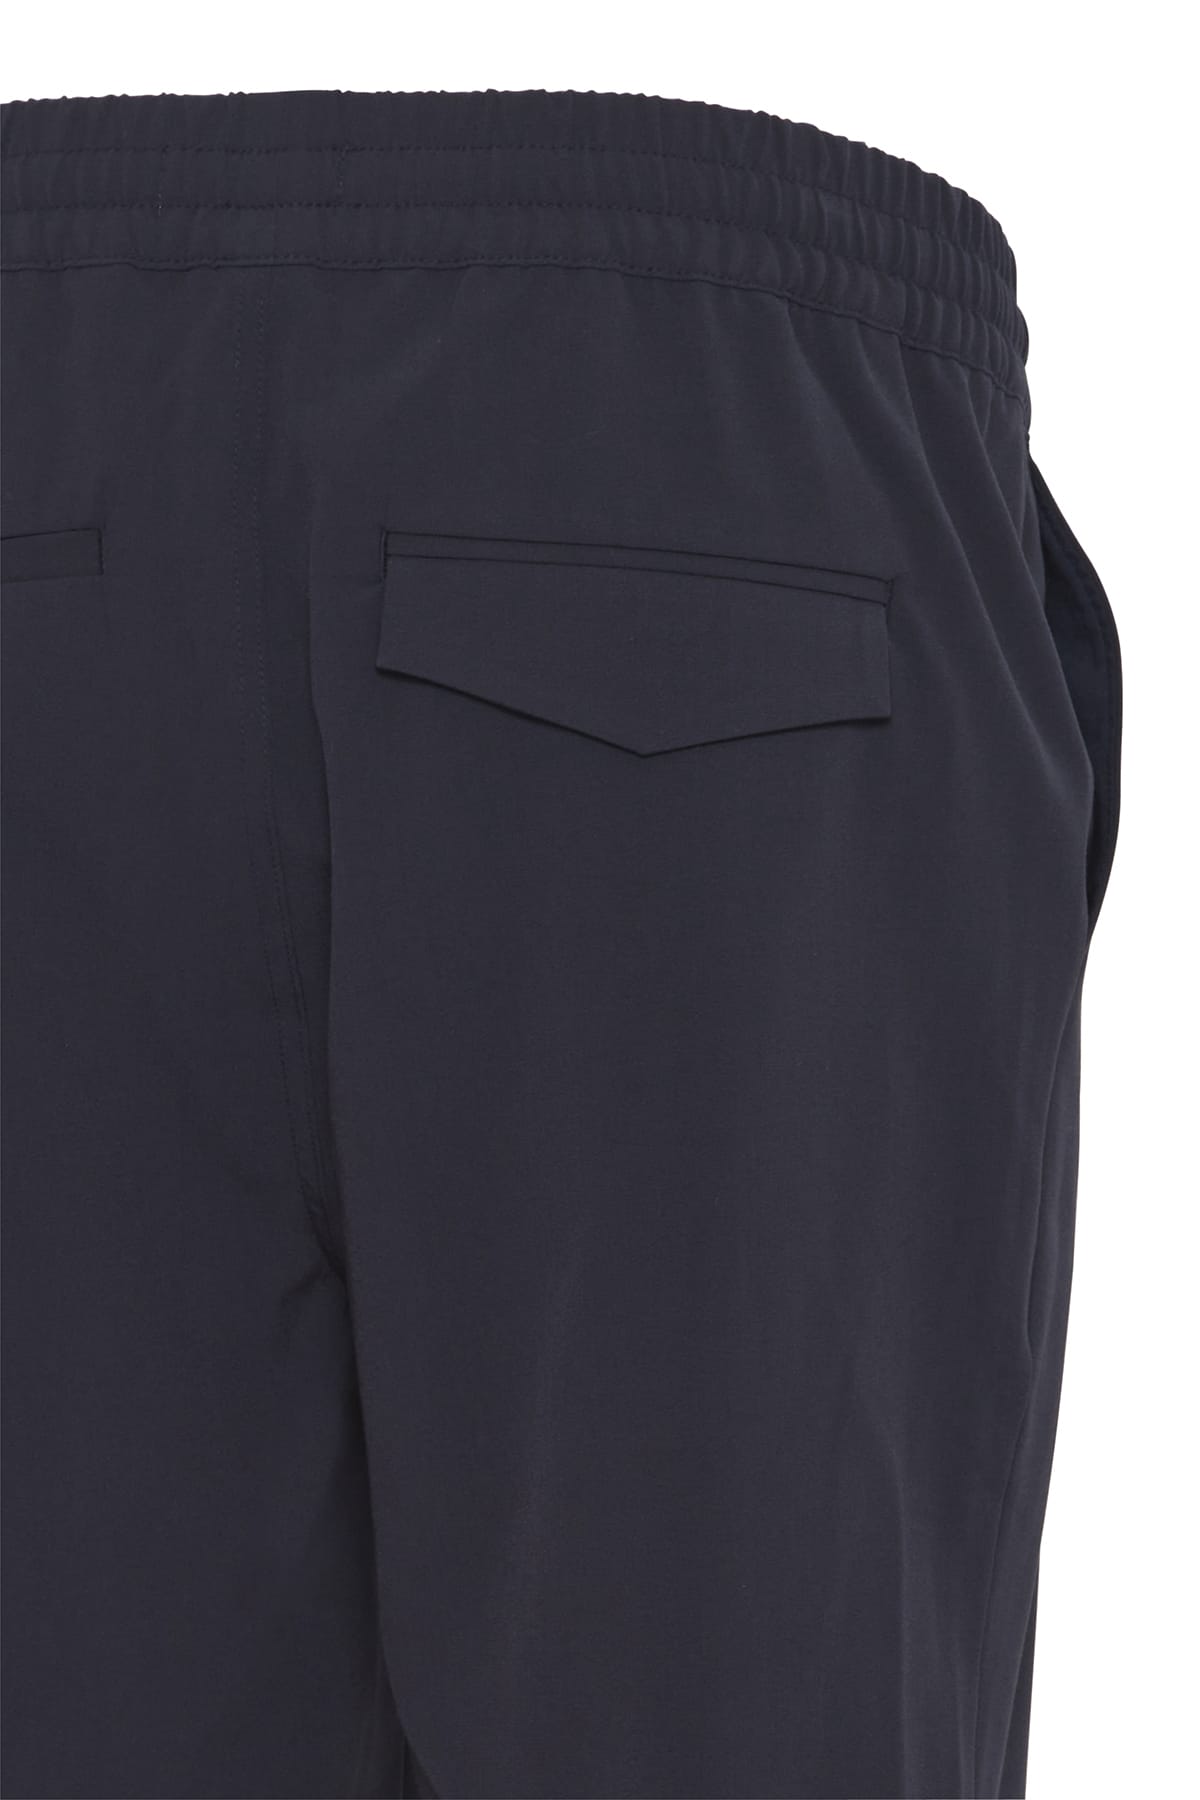 Shorts CFSamos 0141 travel shorts Dark Navy Shorts Casual Friday 